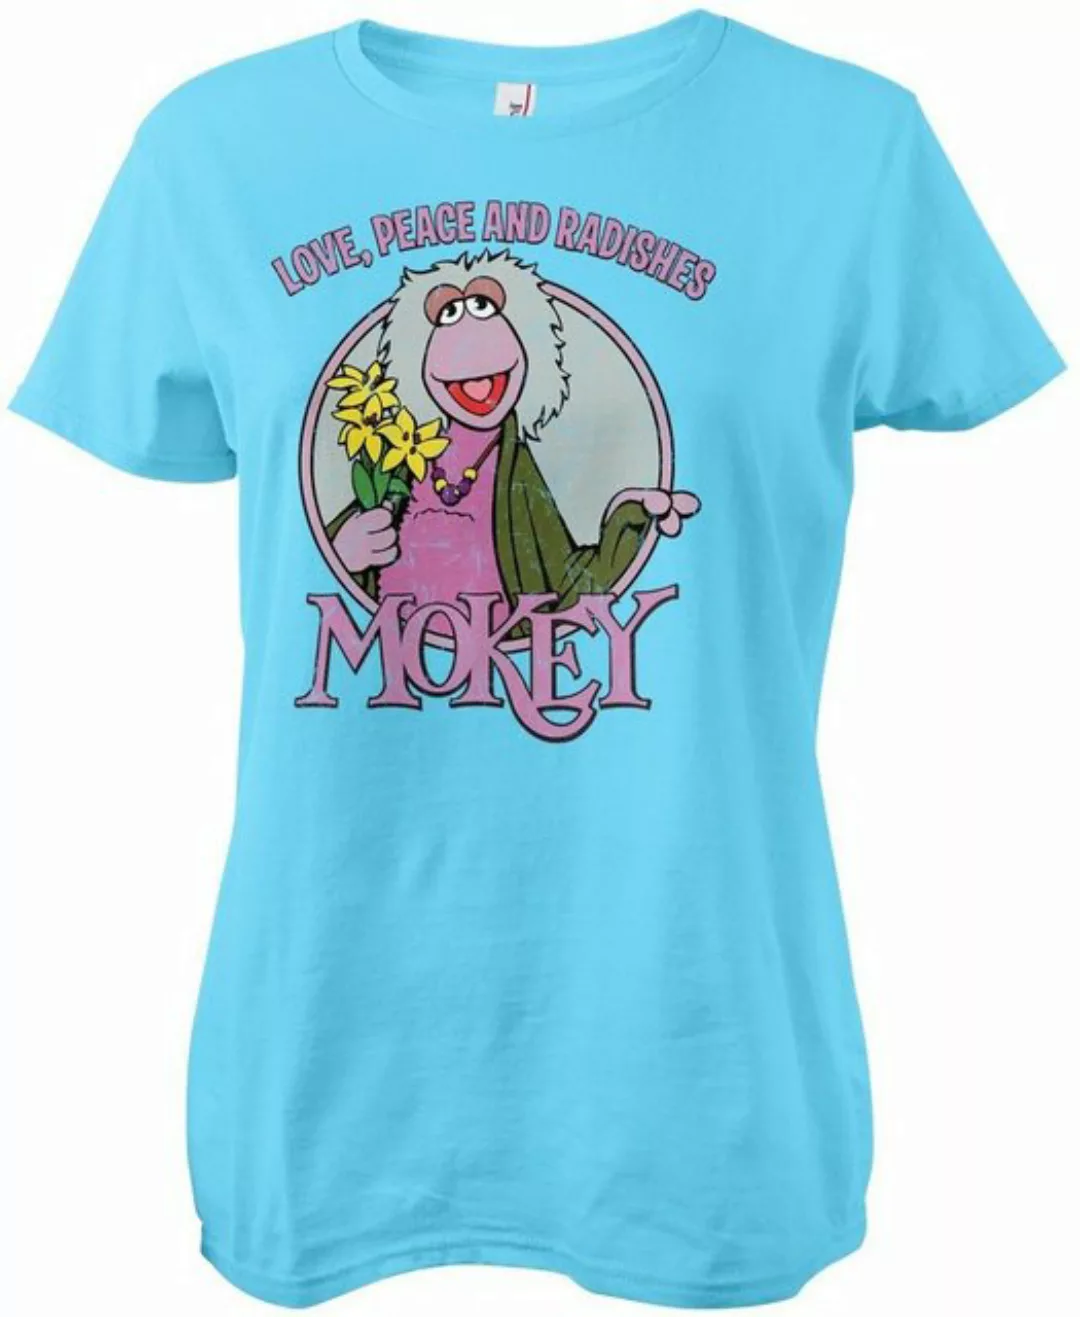 Fraggle Rock T-Shirt Mokey Love, Peace And Radishes Girly Tee günstig online kaufen